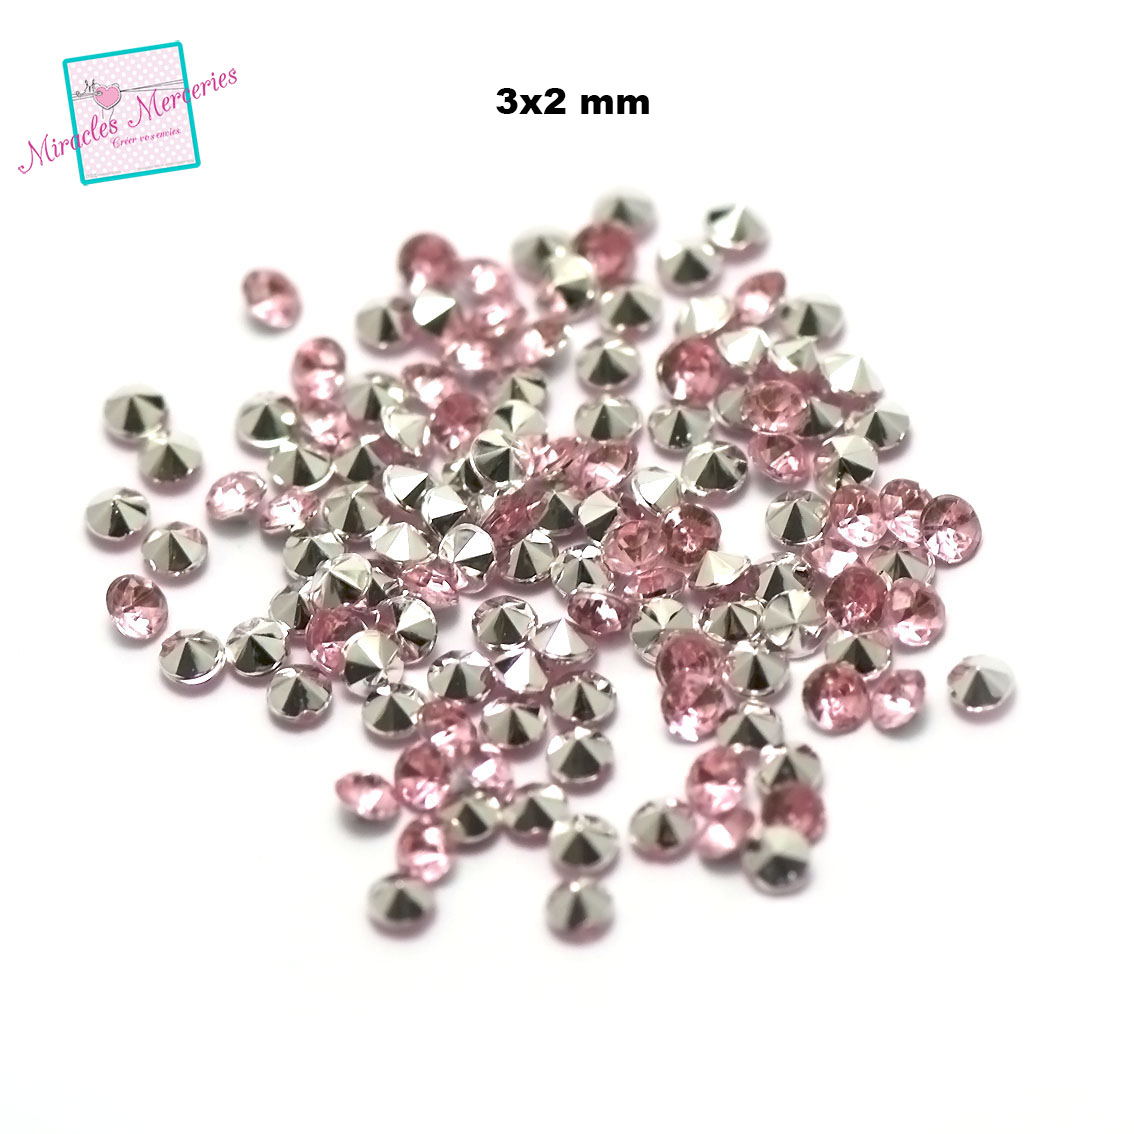 5 g de perles strass en verre à coller cône 3 mm, rose